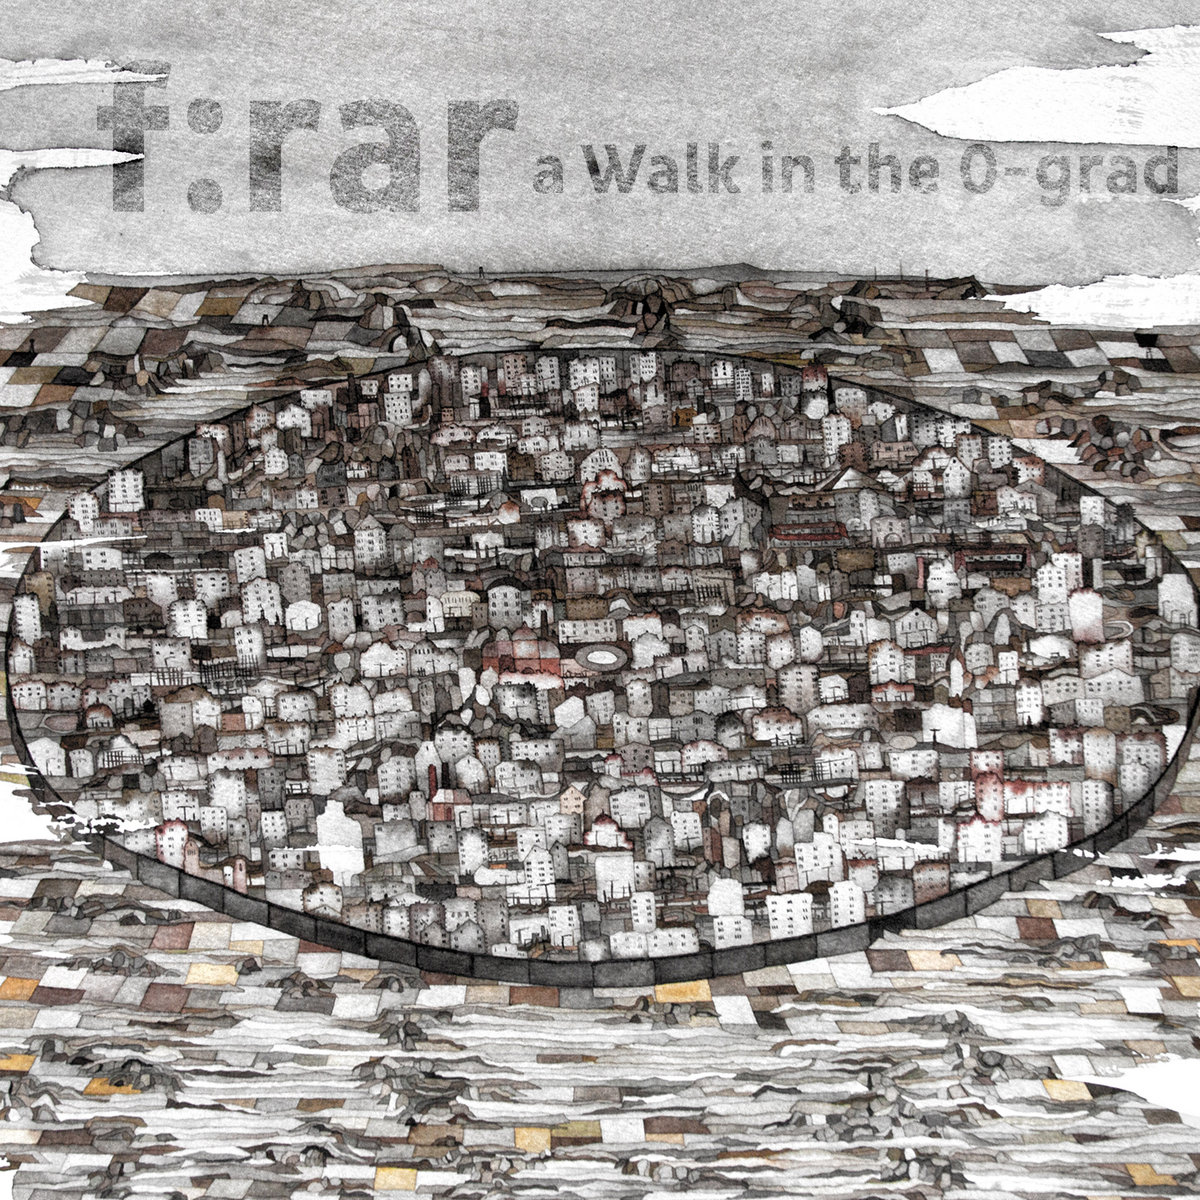 rar – a Walk in the 0​-​grad